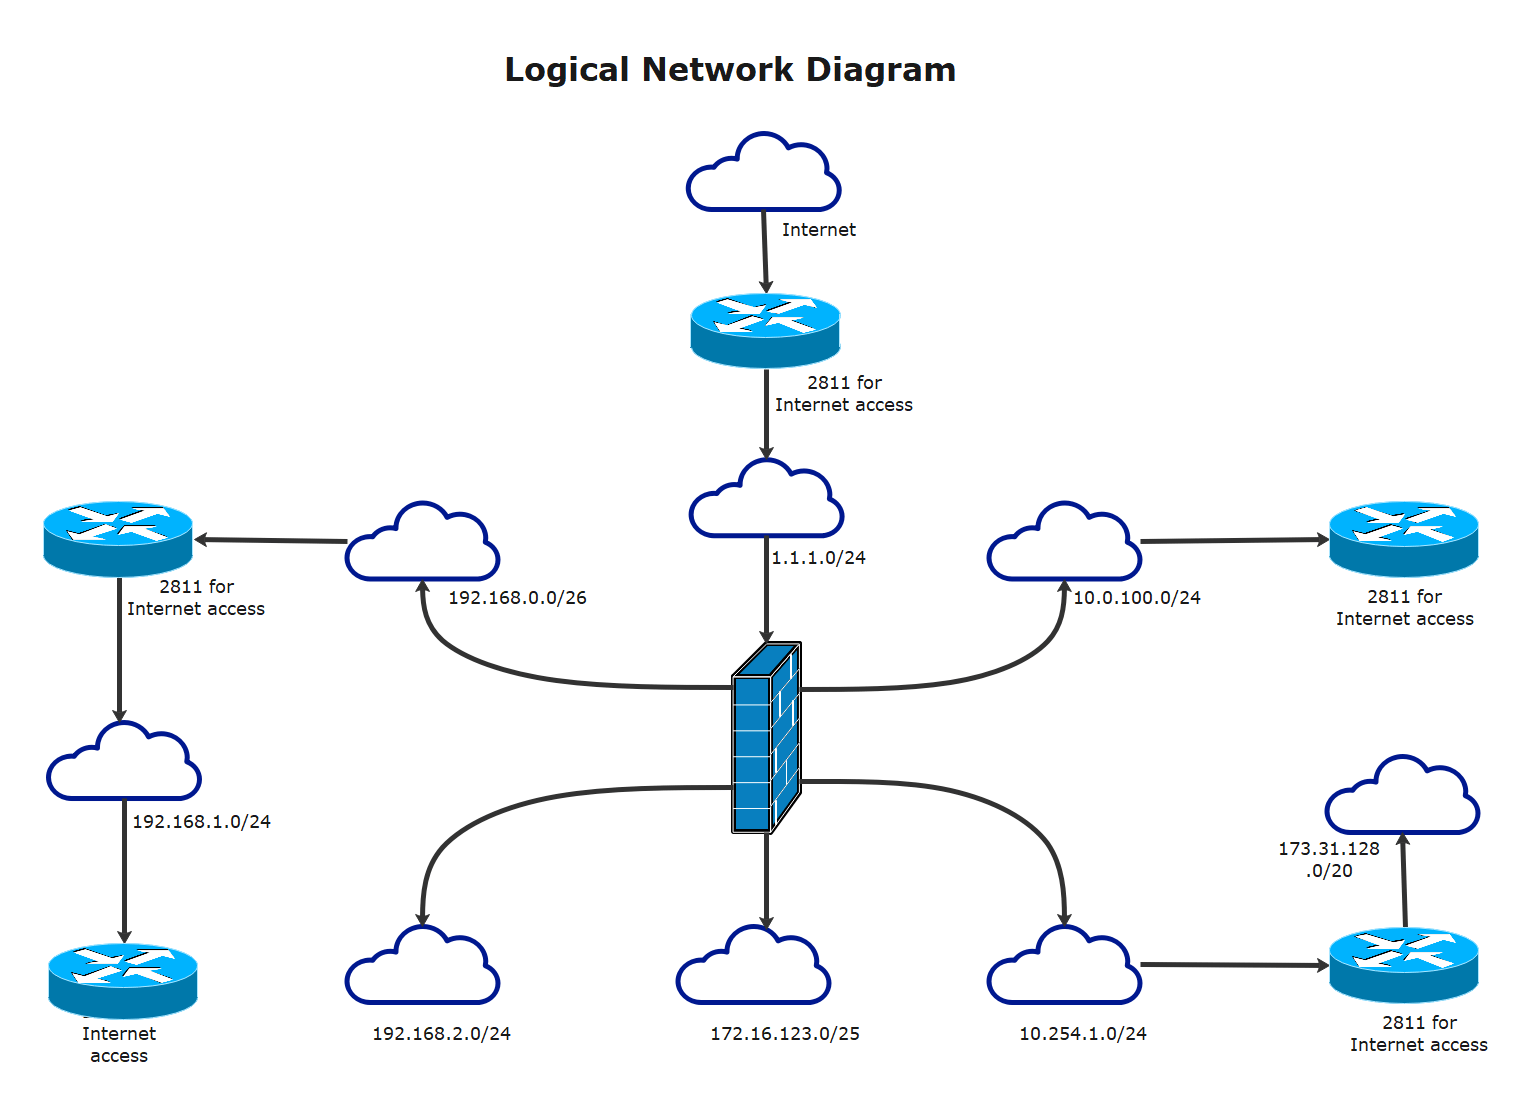 simple wan diagram example